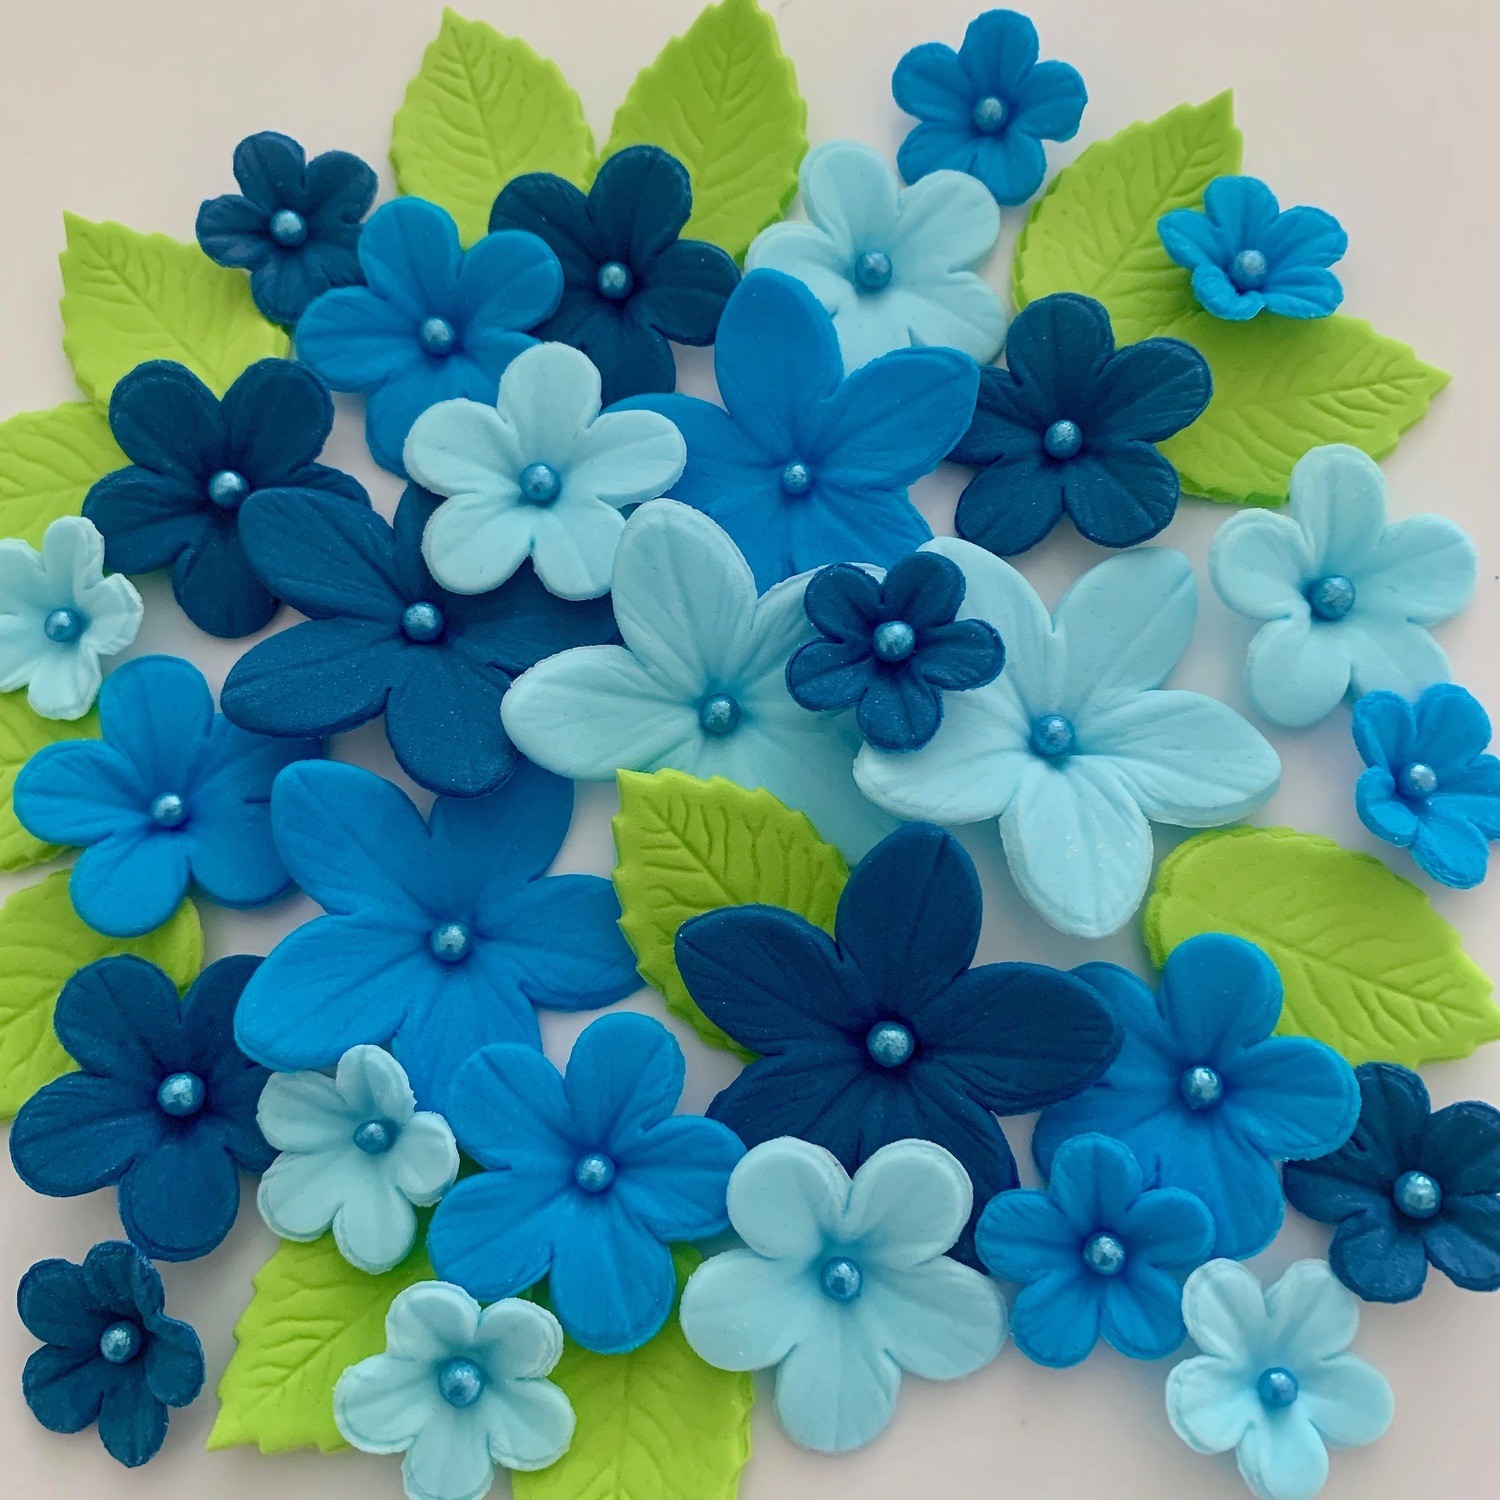 Love Blue Flowers